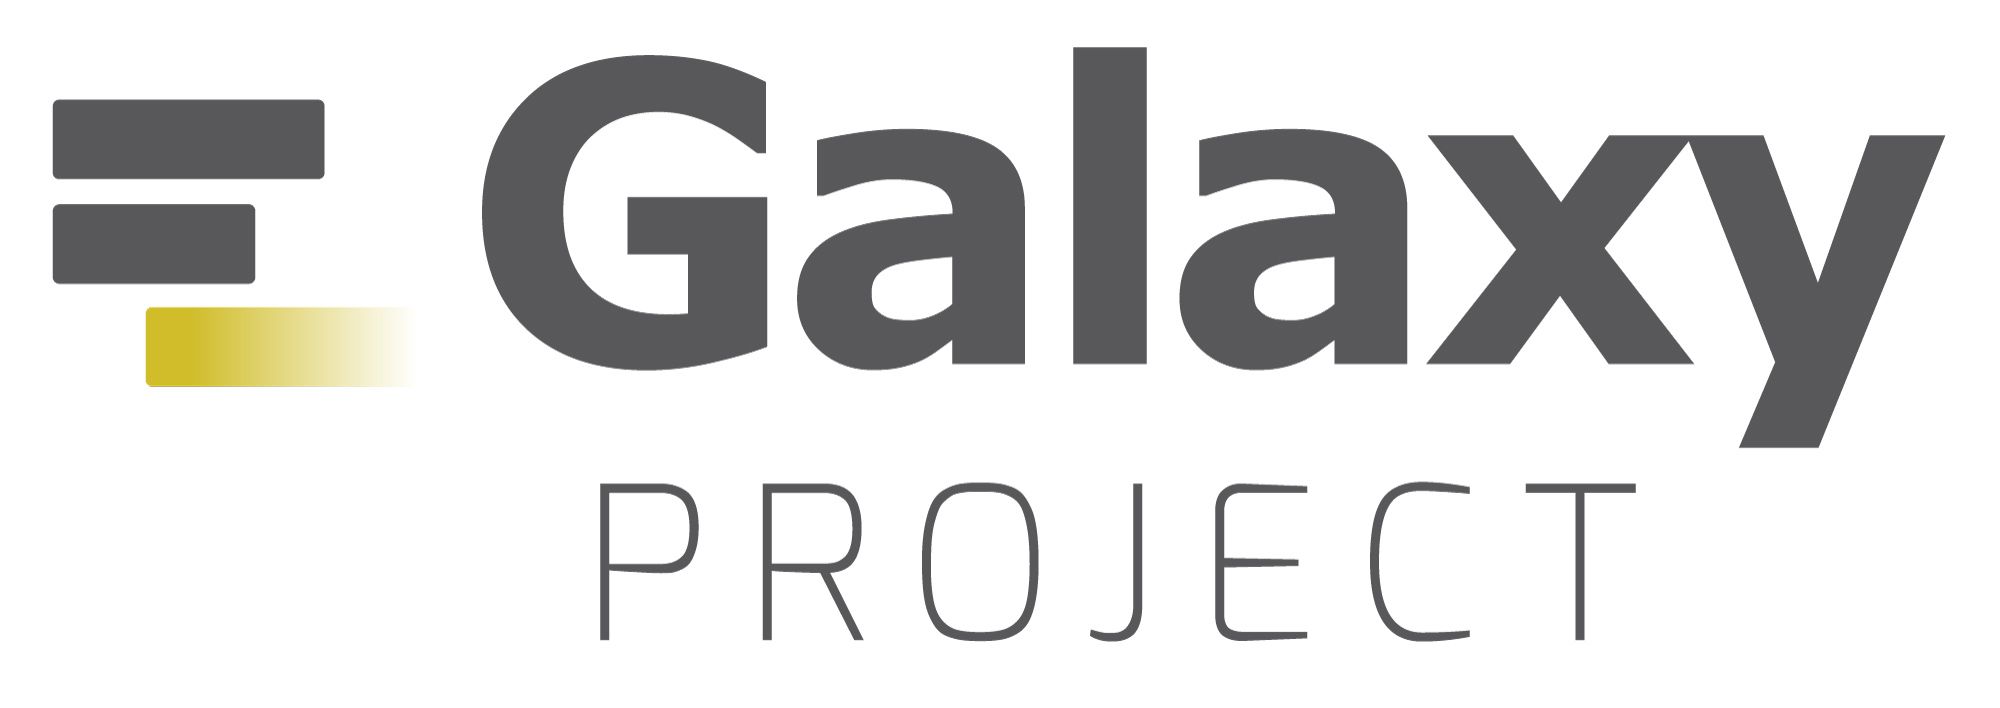 Galaxy project